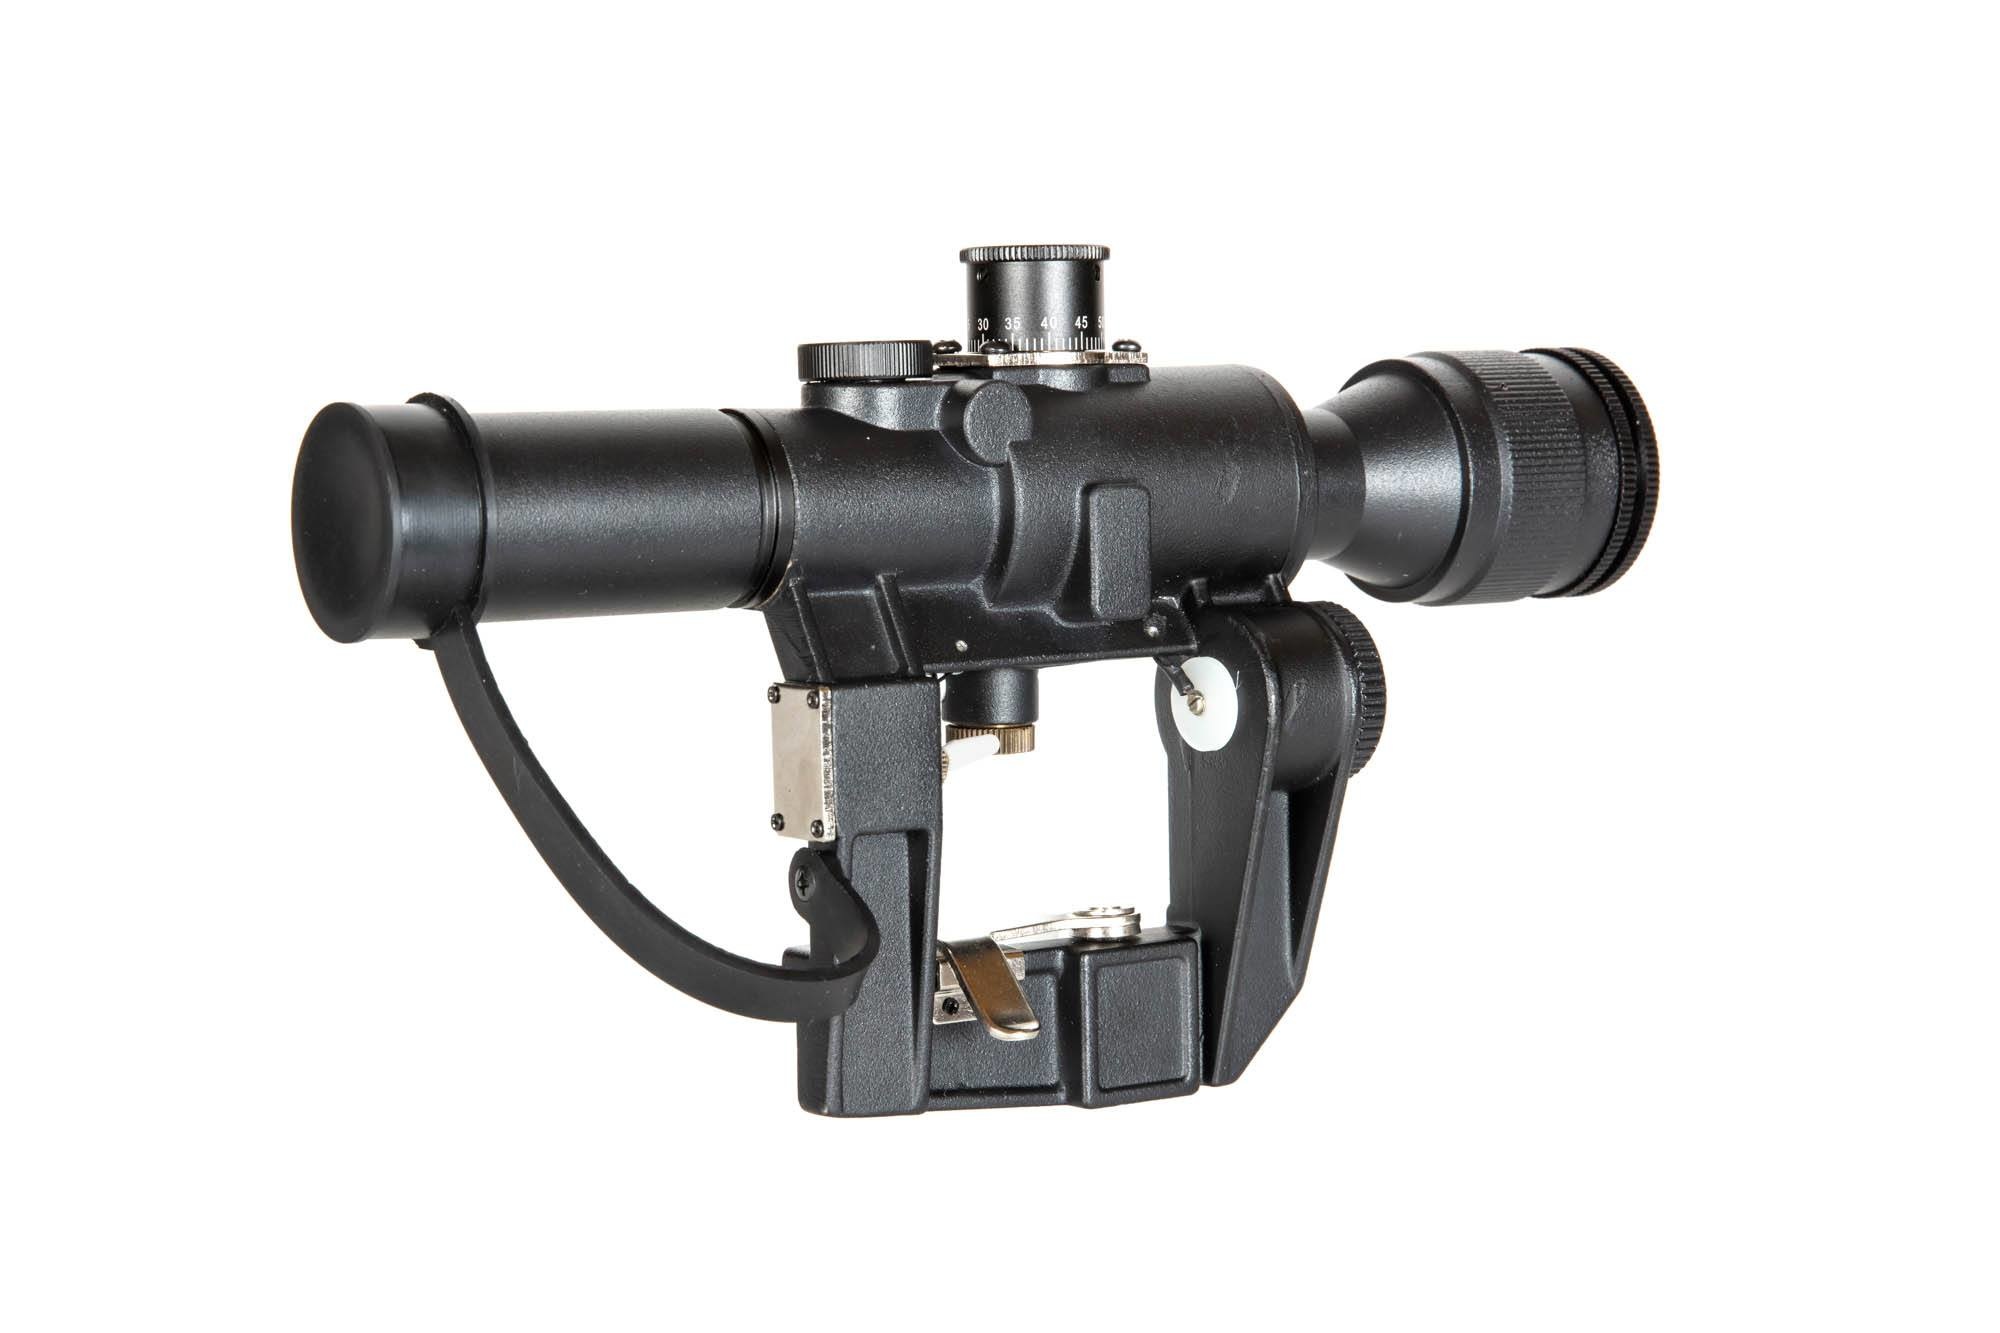 JJ Airsoft 4 × 24 SVD Sniper PSO-1 Mirino - BK